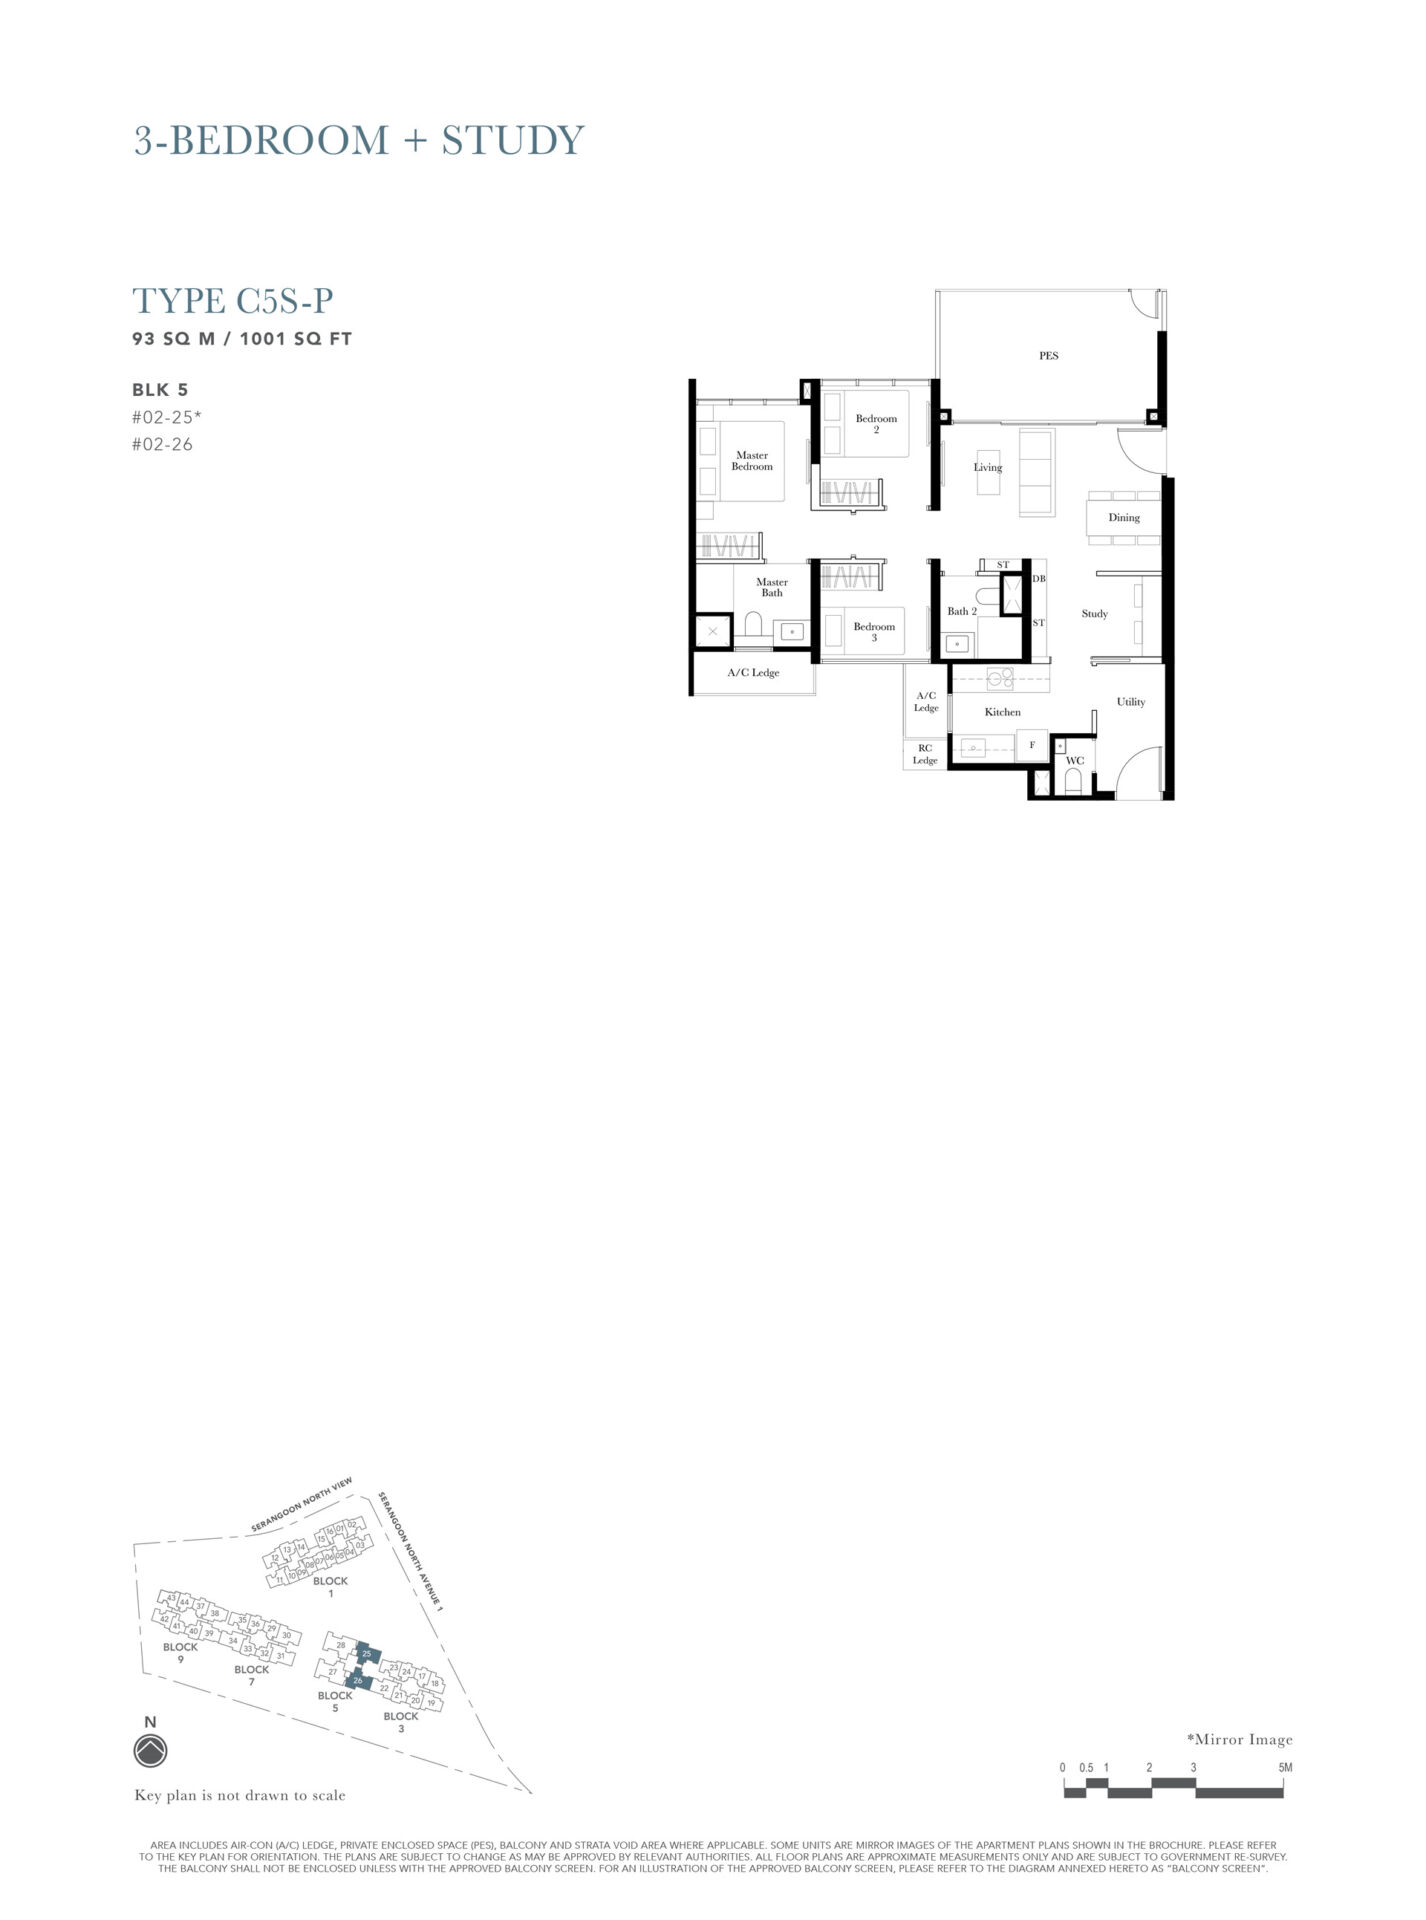 The-Garden-Residences-3-Bedroom-Study-Type-C5SP-1001sf